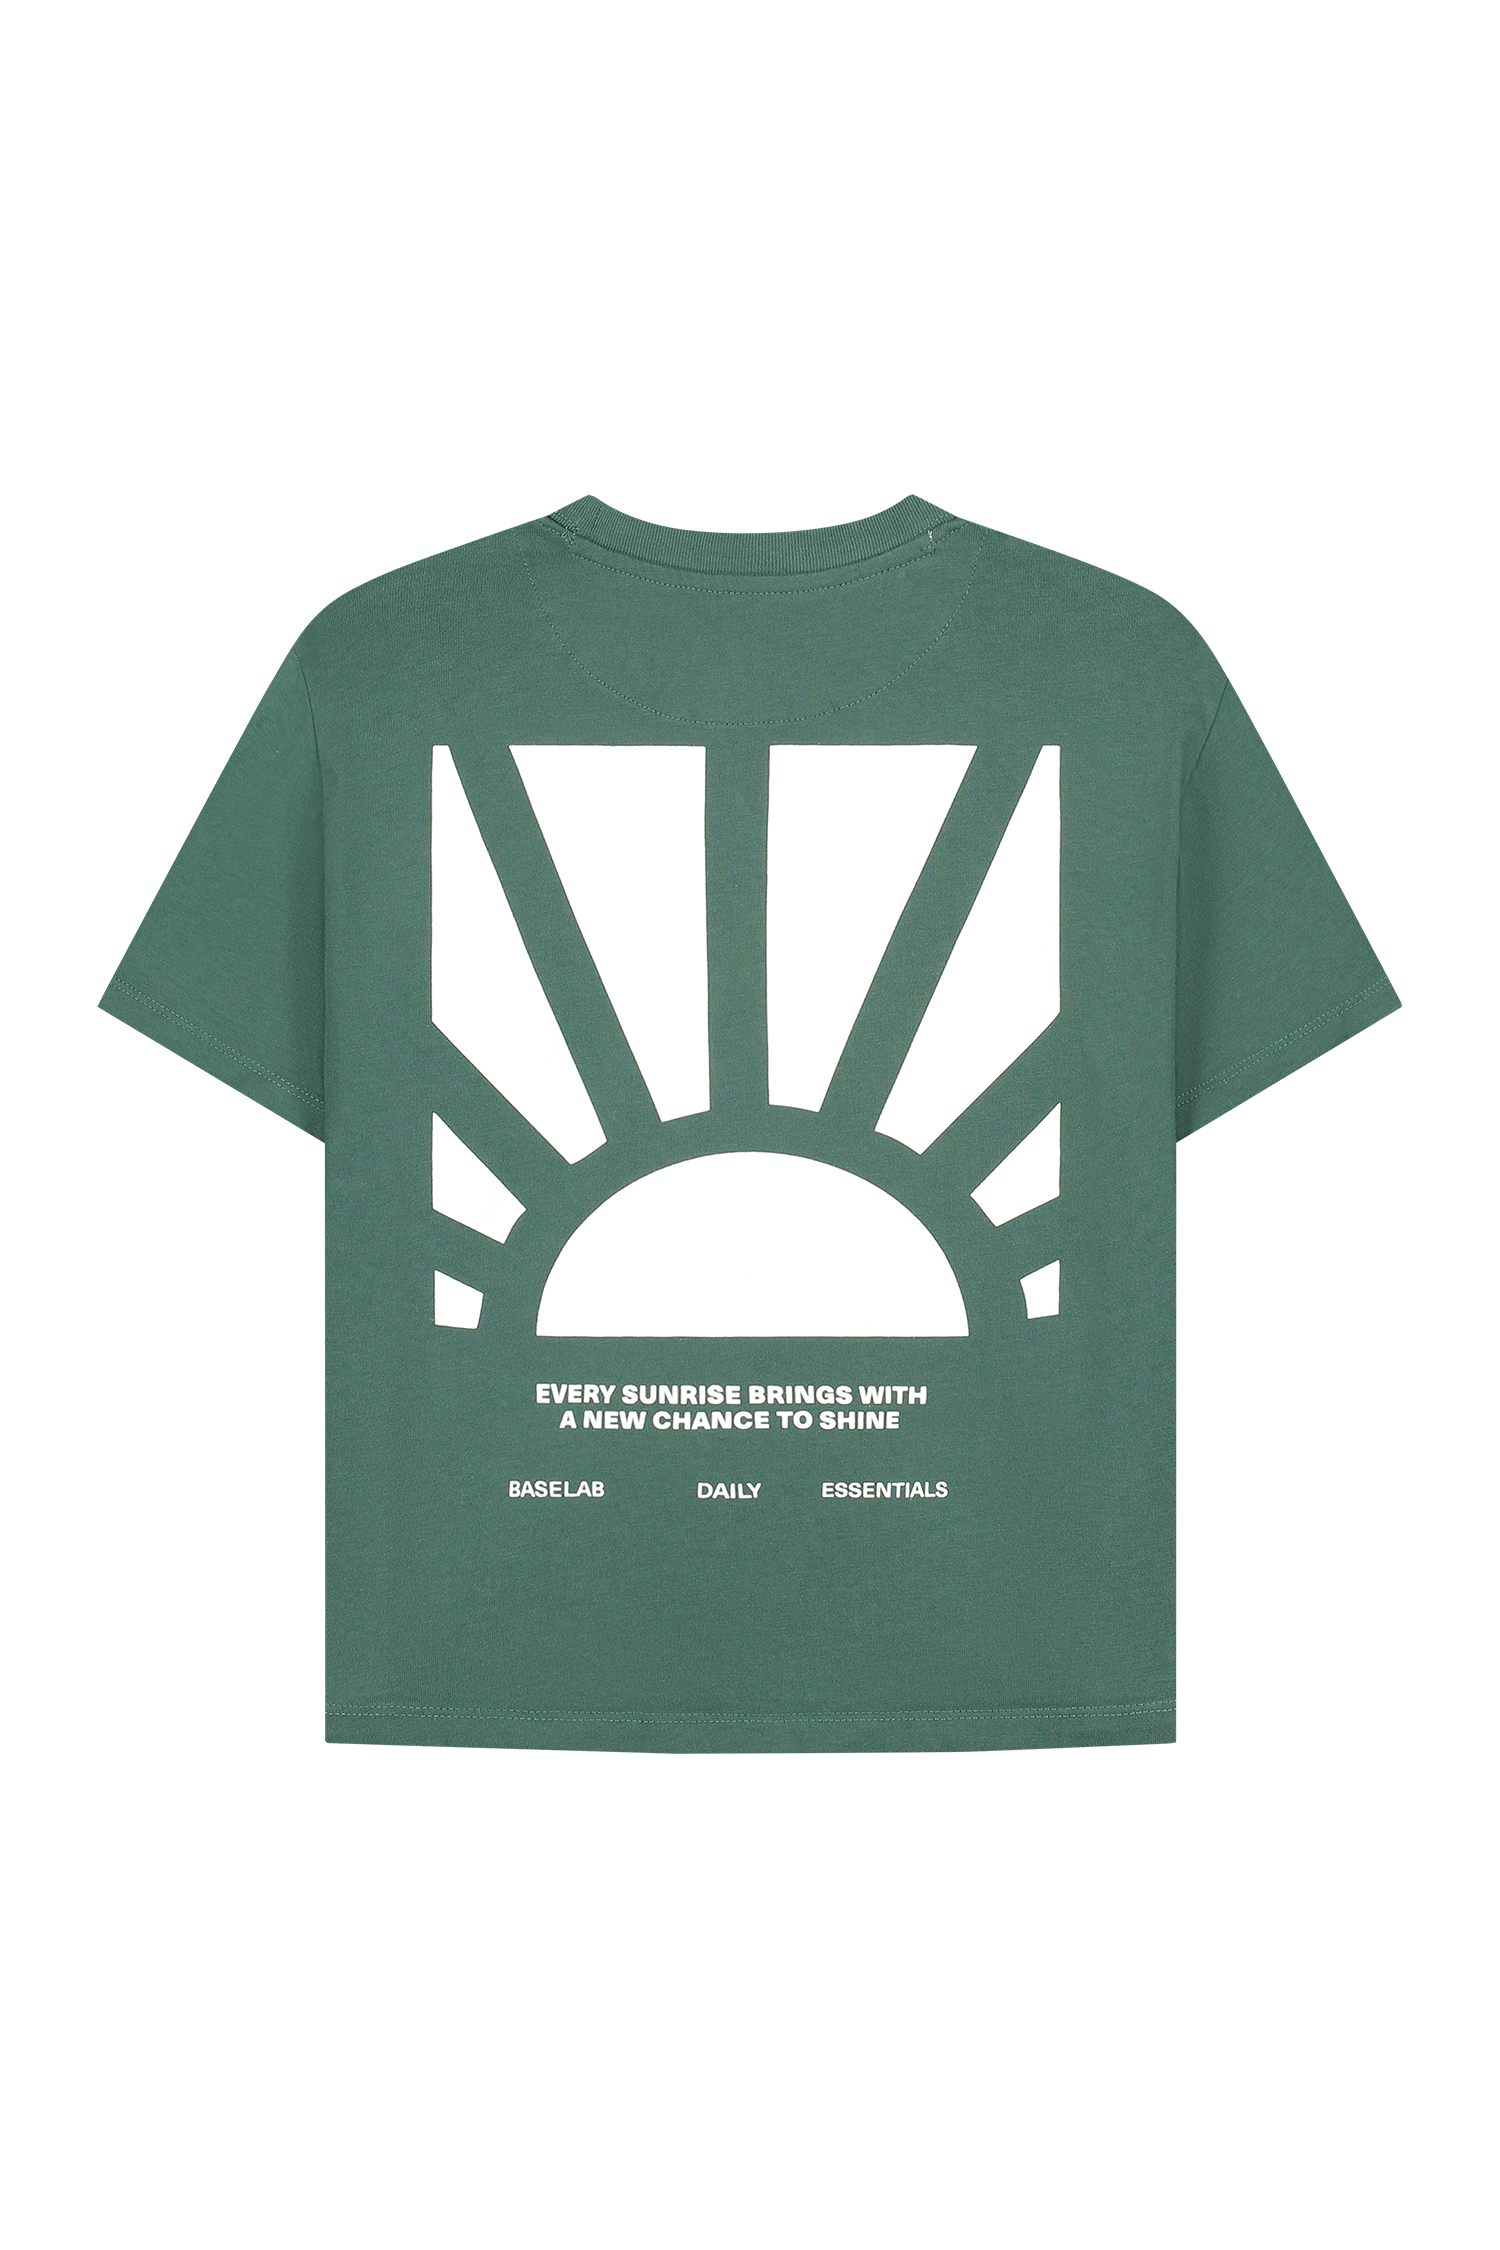 Kinder T-shirt Sunrise groen